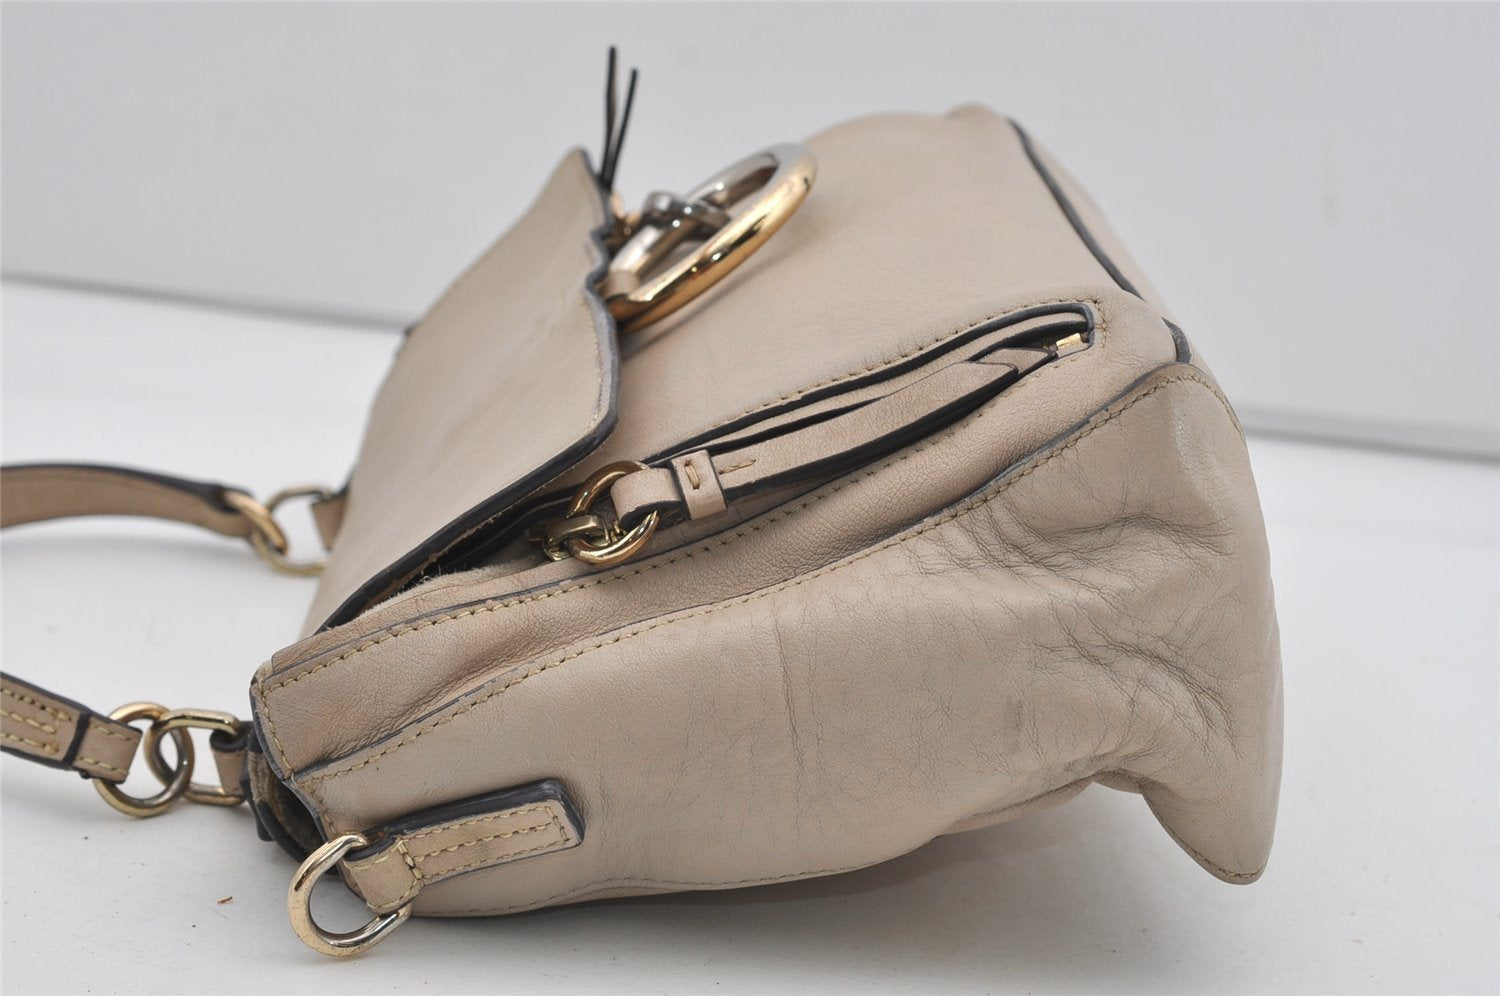 Authentic Chloe Faye Vintage 2Way Shoulder Hand Bag Purse Leather Beige 9093I